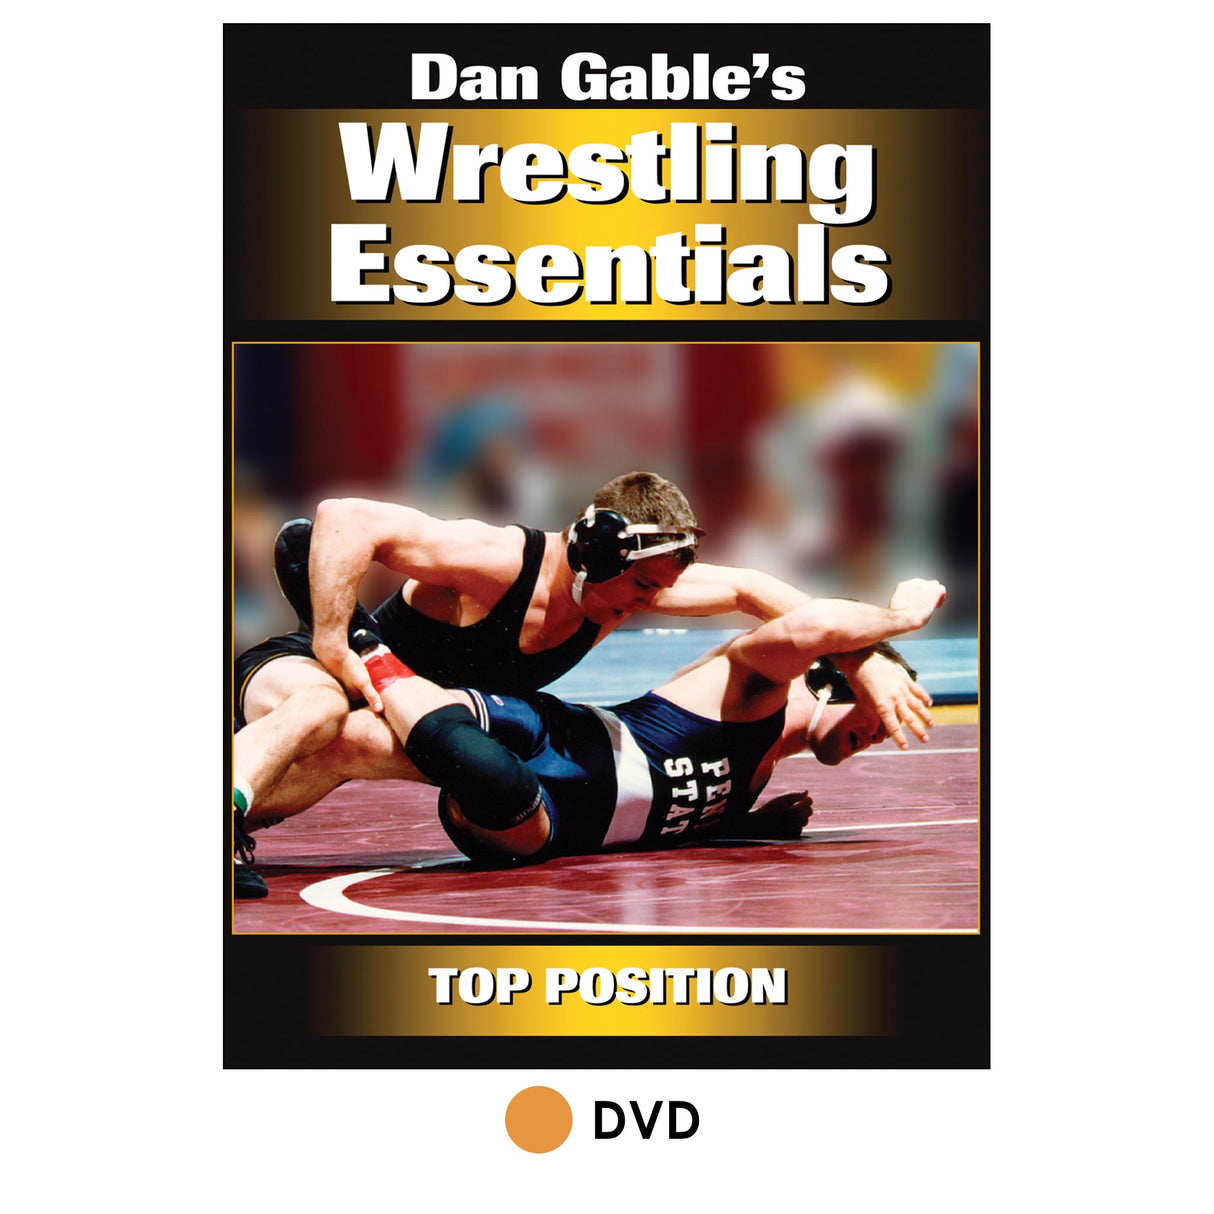 Dan Gable's Wrestling Essentials: Top Position DVD